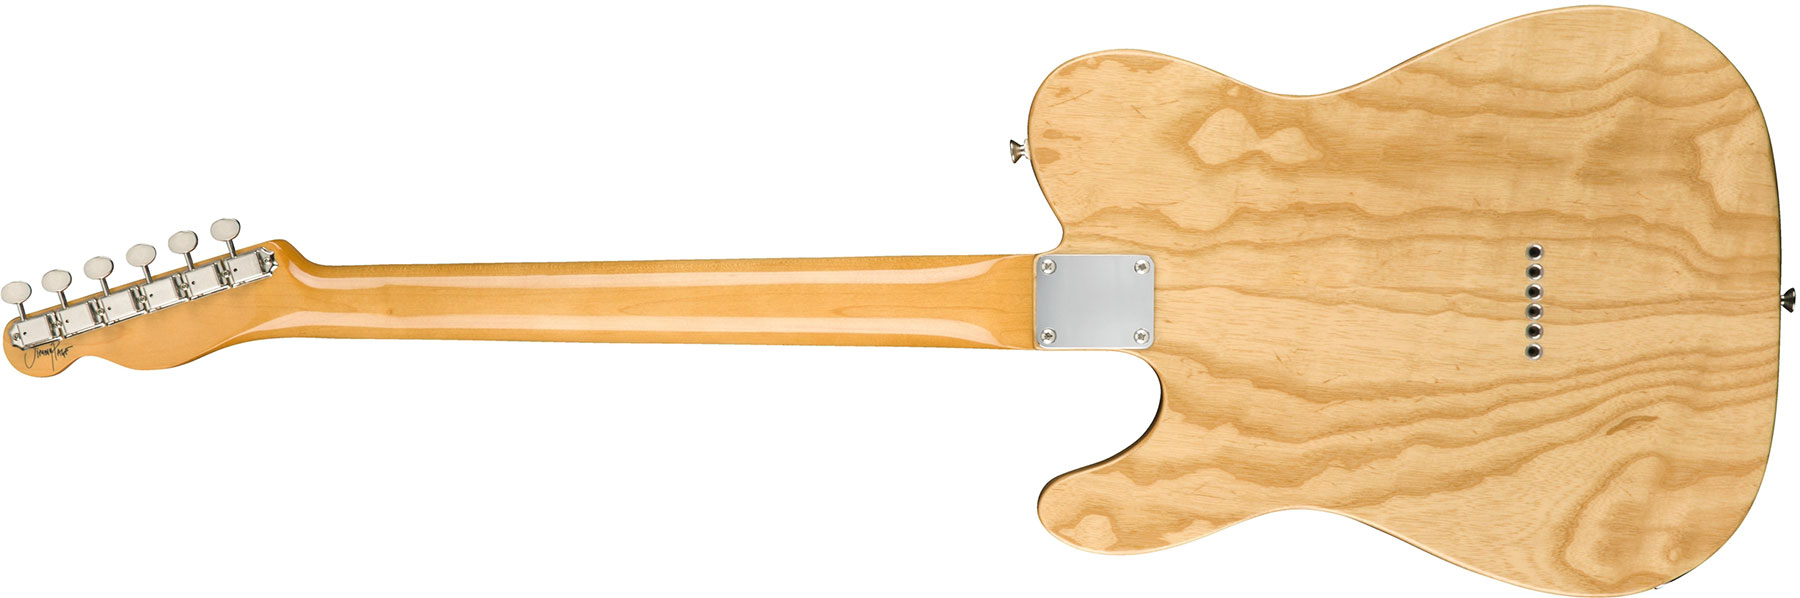 Fender Jimmy Page Tele Dragon Ltd Mex Signature Rw - Natural - Televorm elektrische gitaar - Variation 1